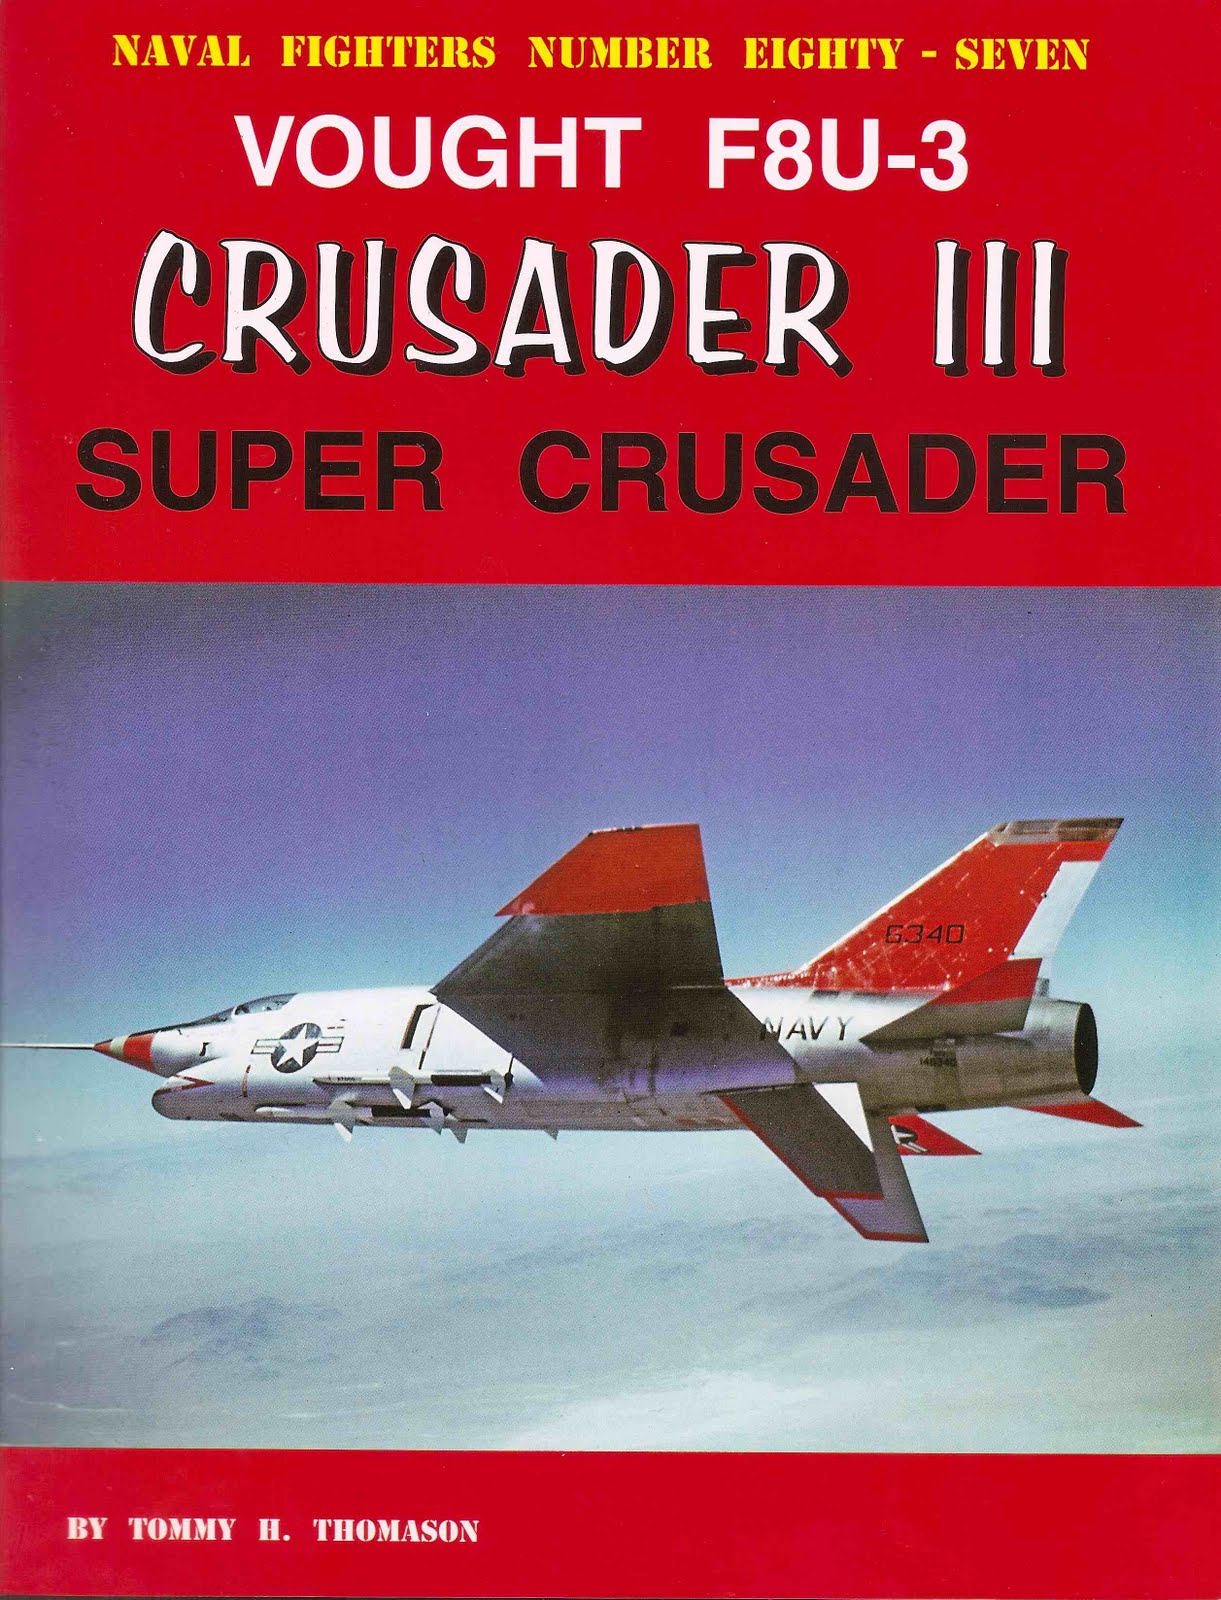 Bouquin sur le Crusader III F8U-3+Cover